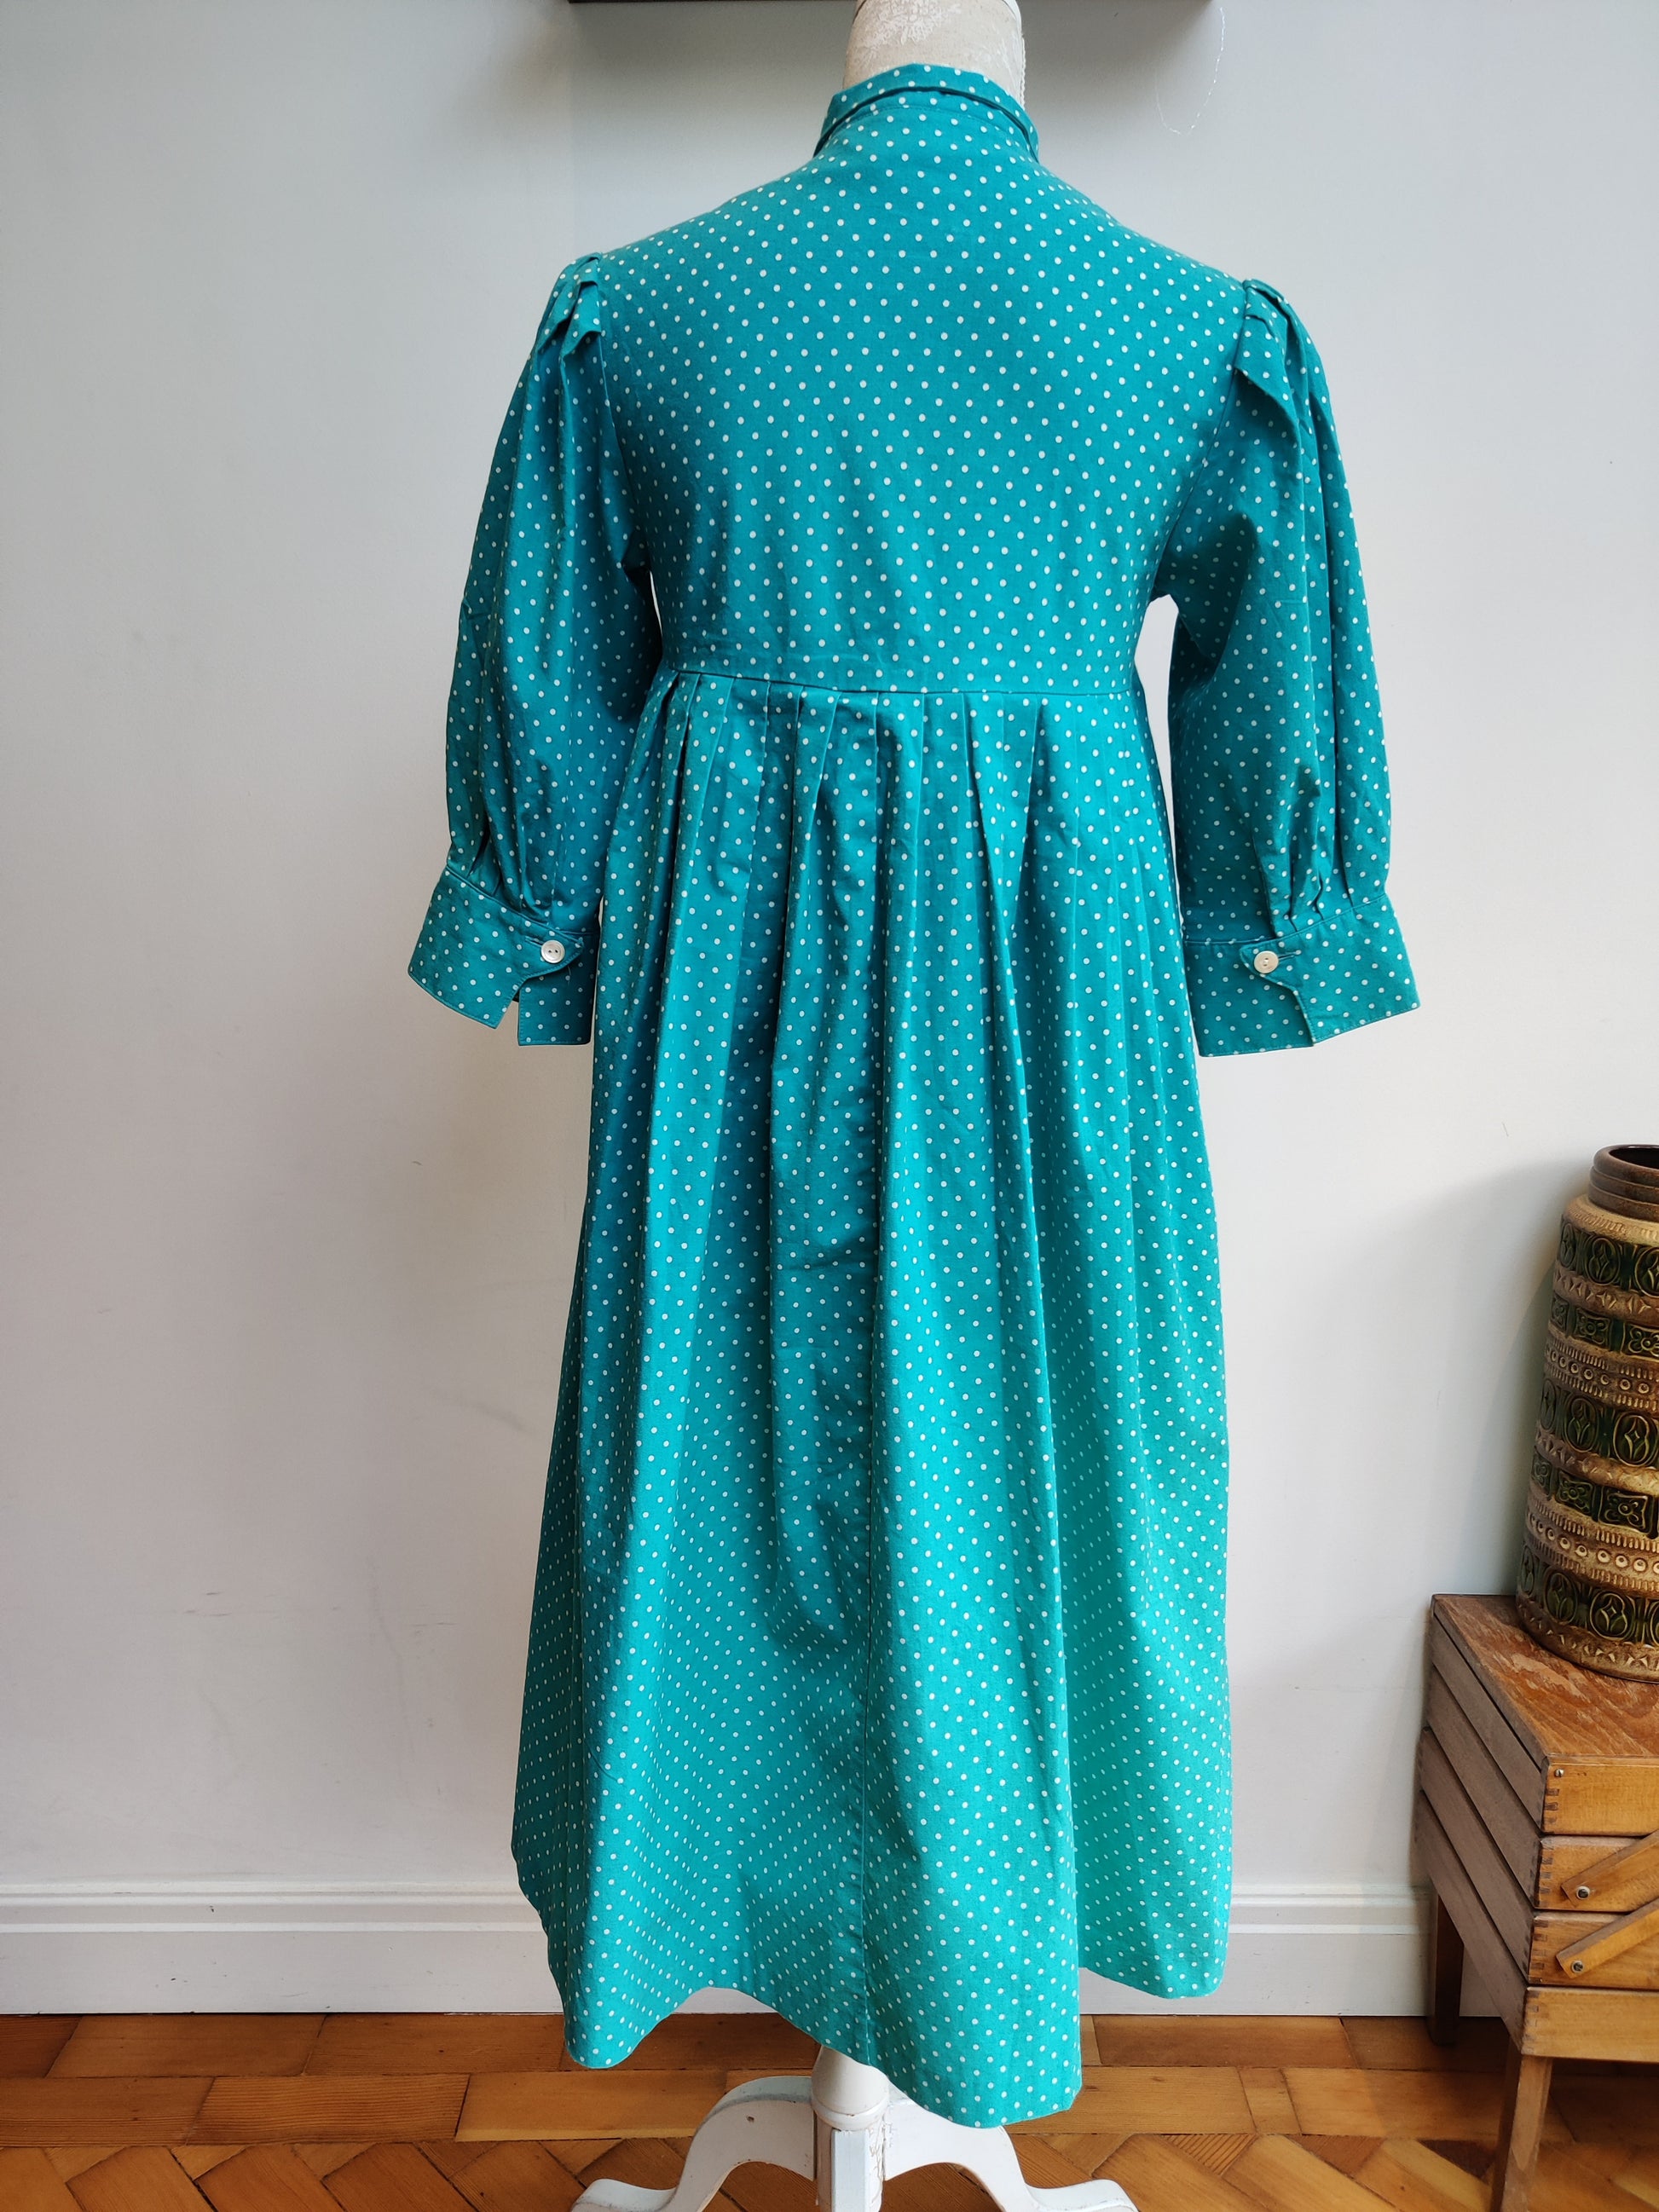 Small vintage Laura Ashley dress